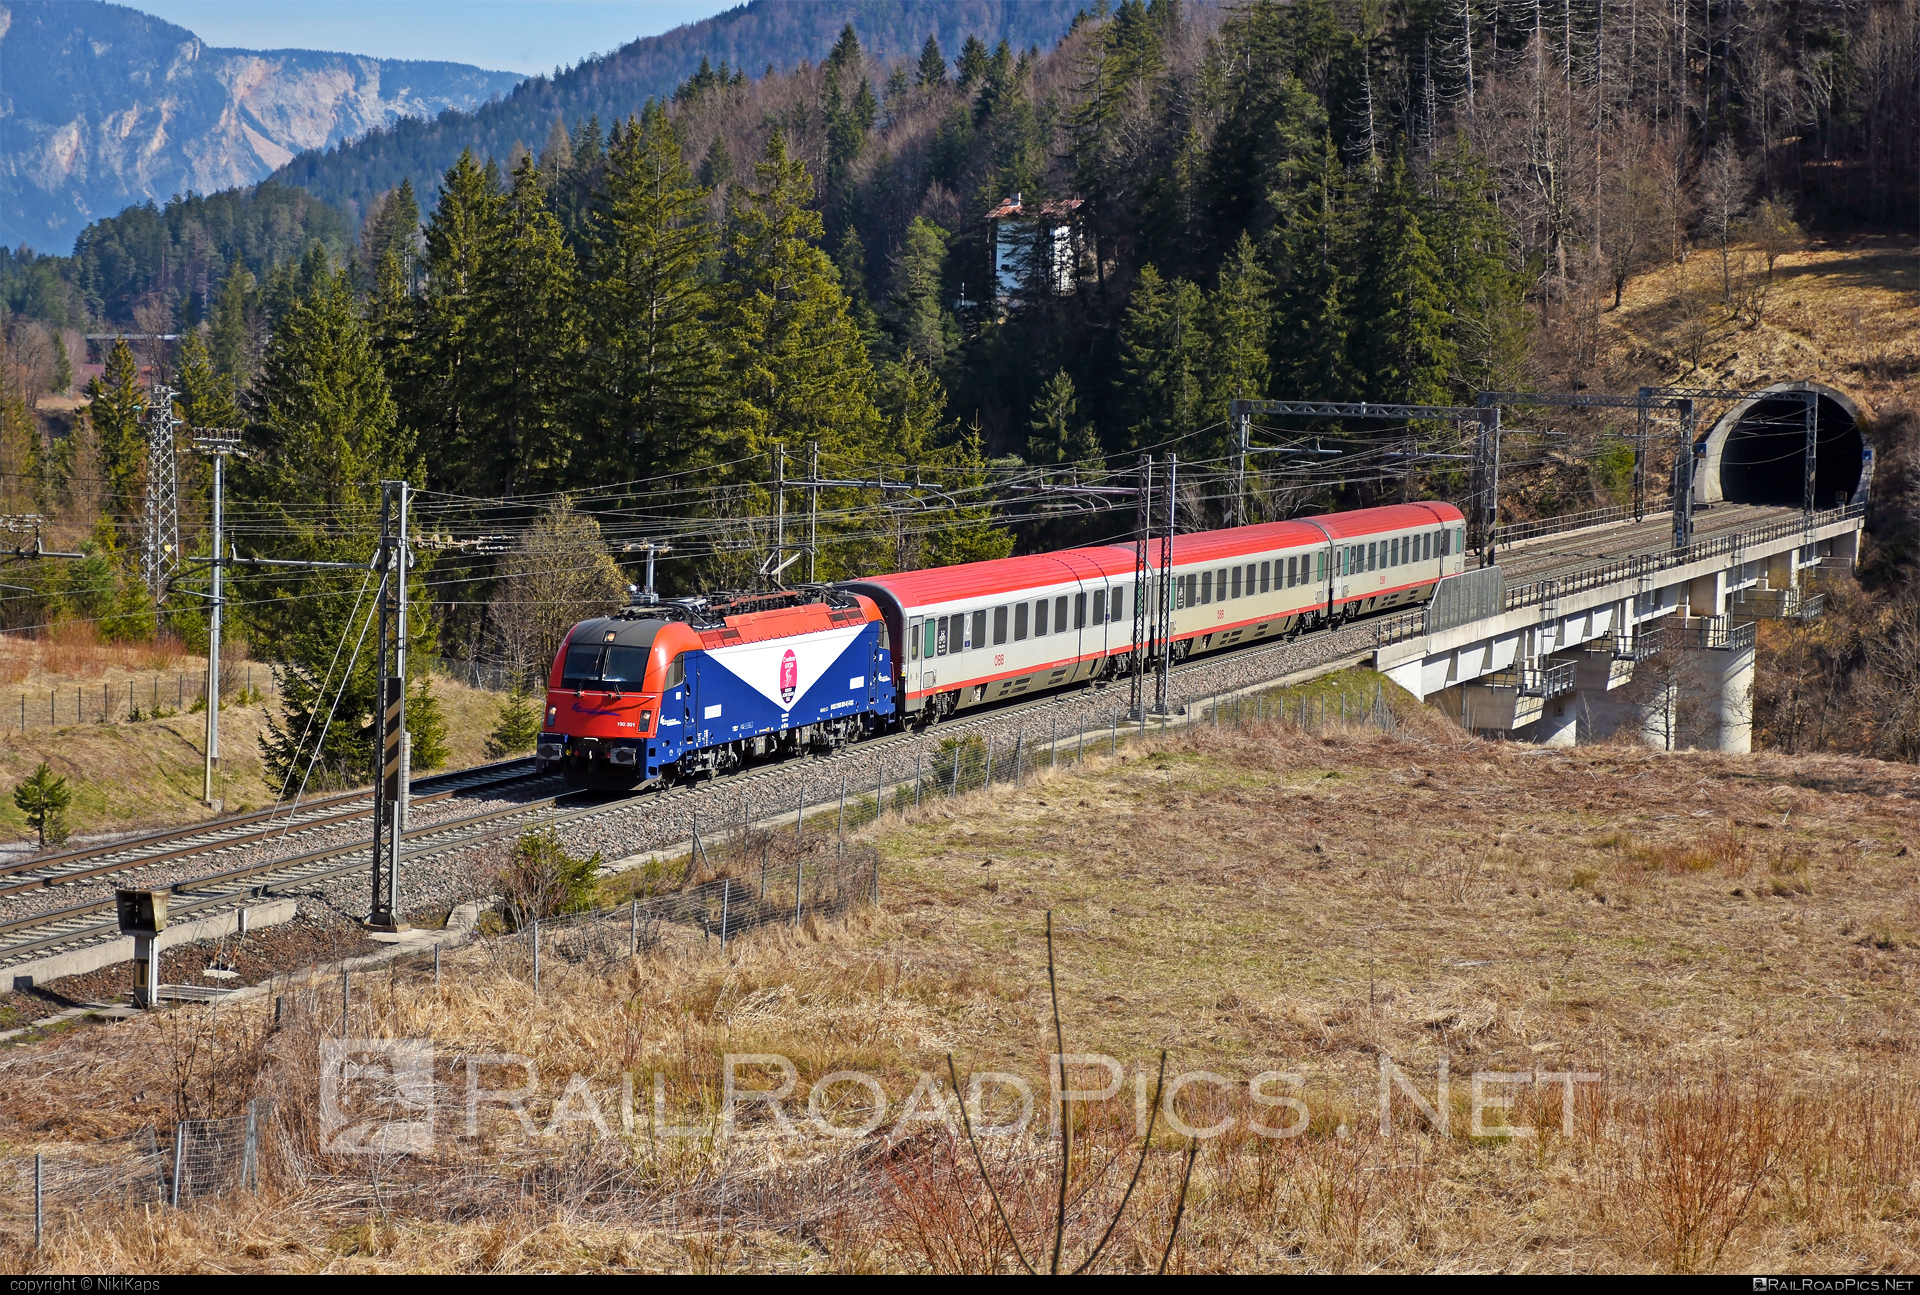 Siemens ES 64 U4 - 190 301 operated by Società Ferrovie Udine Cividale #bridge #es64 #es64u4 #eurosprinter #fuc #micotra #siemens #siemensEs64 #siemensEs64u4 #siemenstaurus #taurus #tauruslocomotive #tunnel